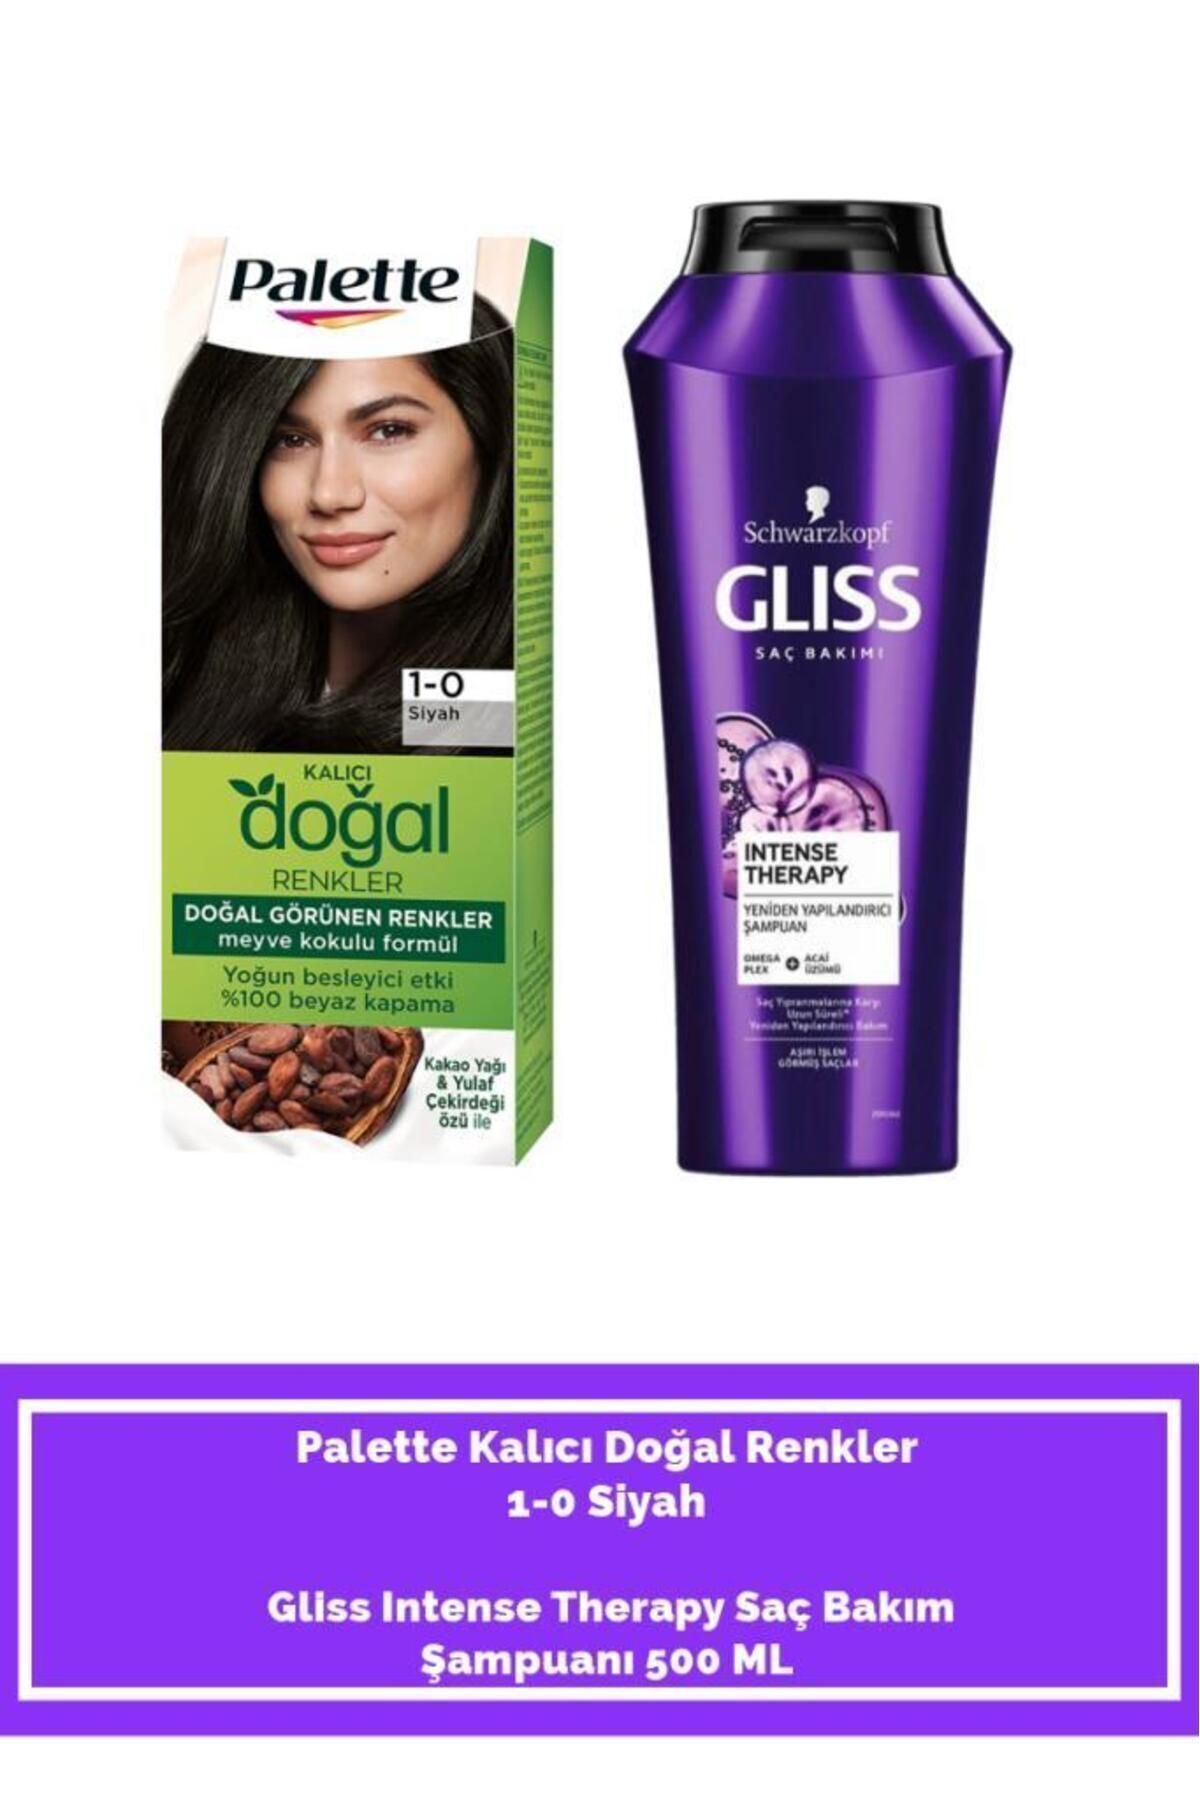 Palette Kalıcı Doğal Renkler 1-0 Siyah Gliss Intense Therapy Saç Bakım Şampuanı 500 ml